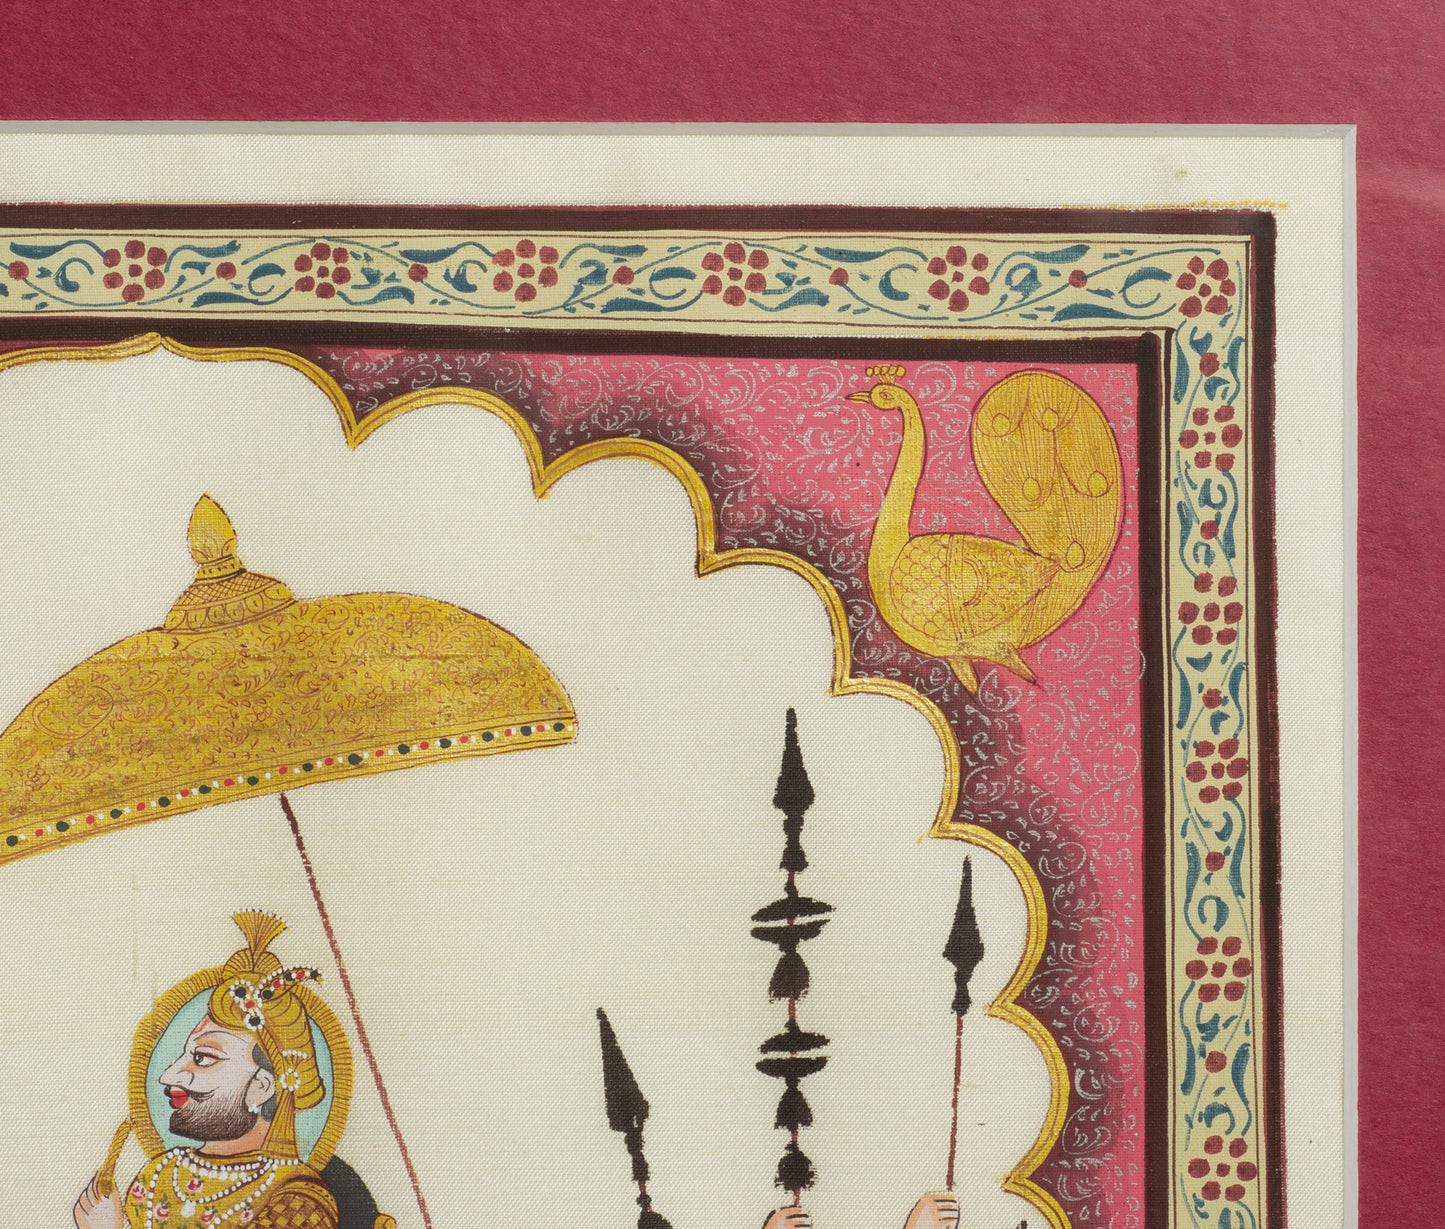 Vintage Indian Silk Painting of a Maharaja on Horse & Servants, Framed & Glazed (Code 2774)